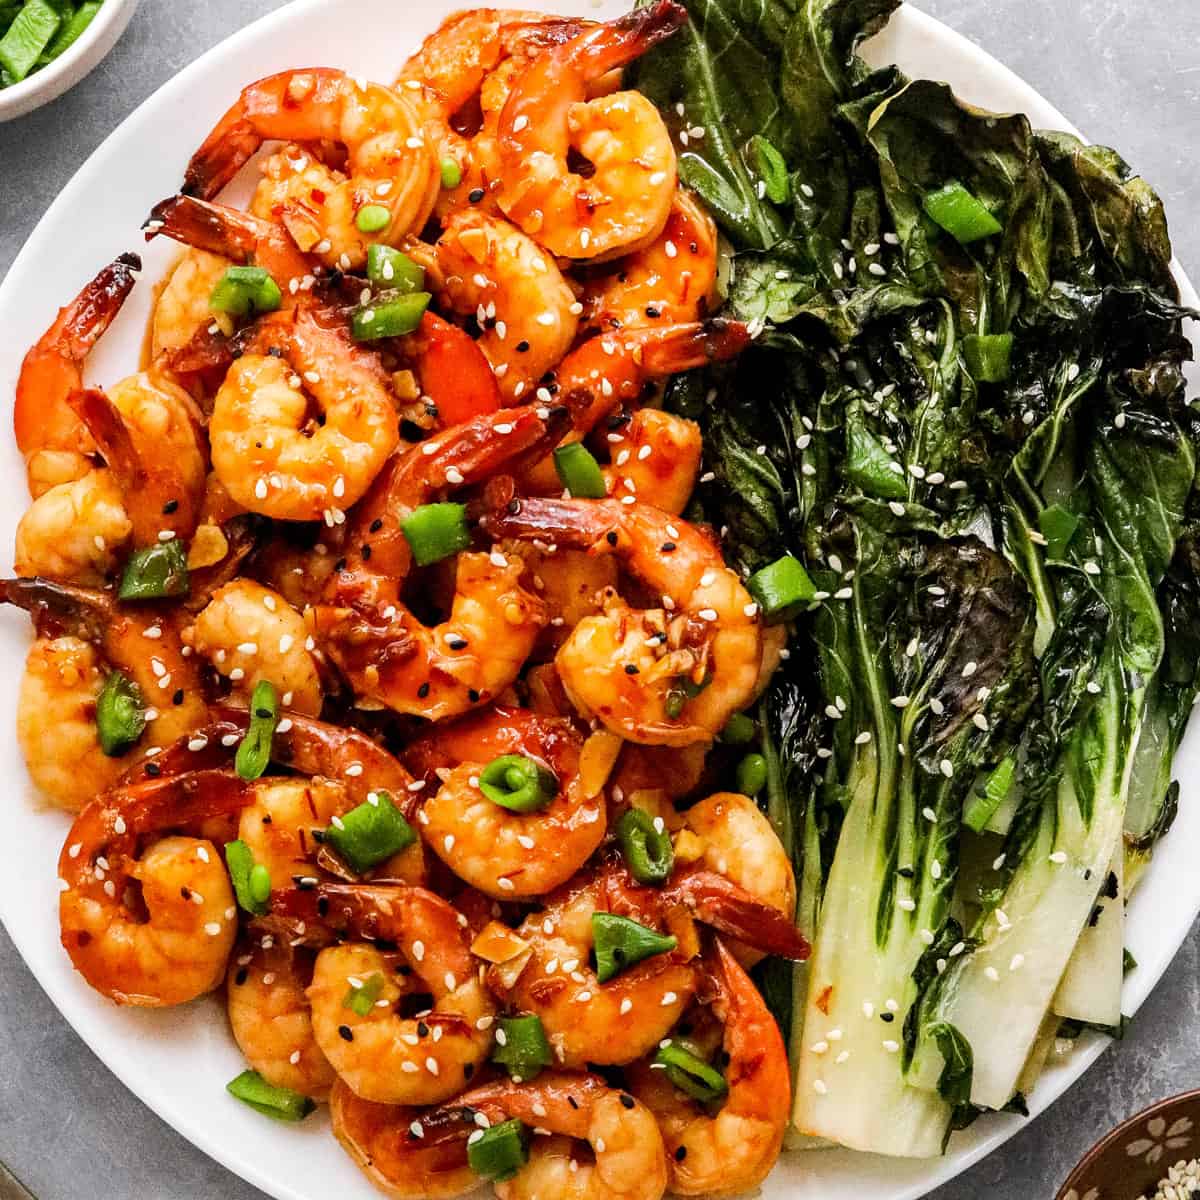 https://www.thechunkychef.com/wp-content/uploads/2022/01/Chili-Garlic-Sheet-Pan-Shrimp-with-Baby-Bok-Choy-recipe-card.jpg